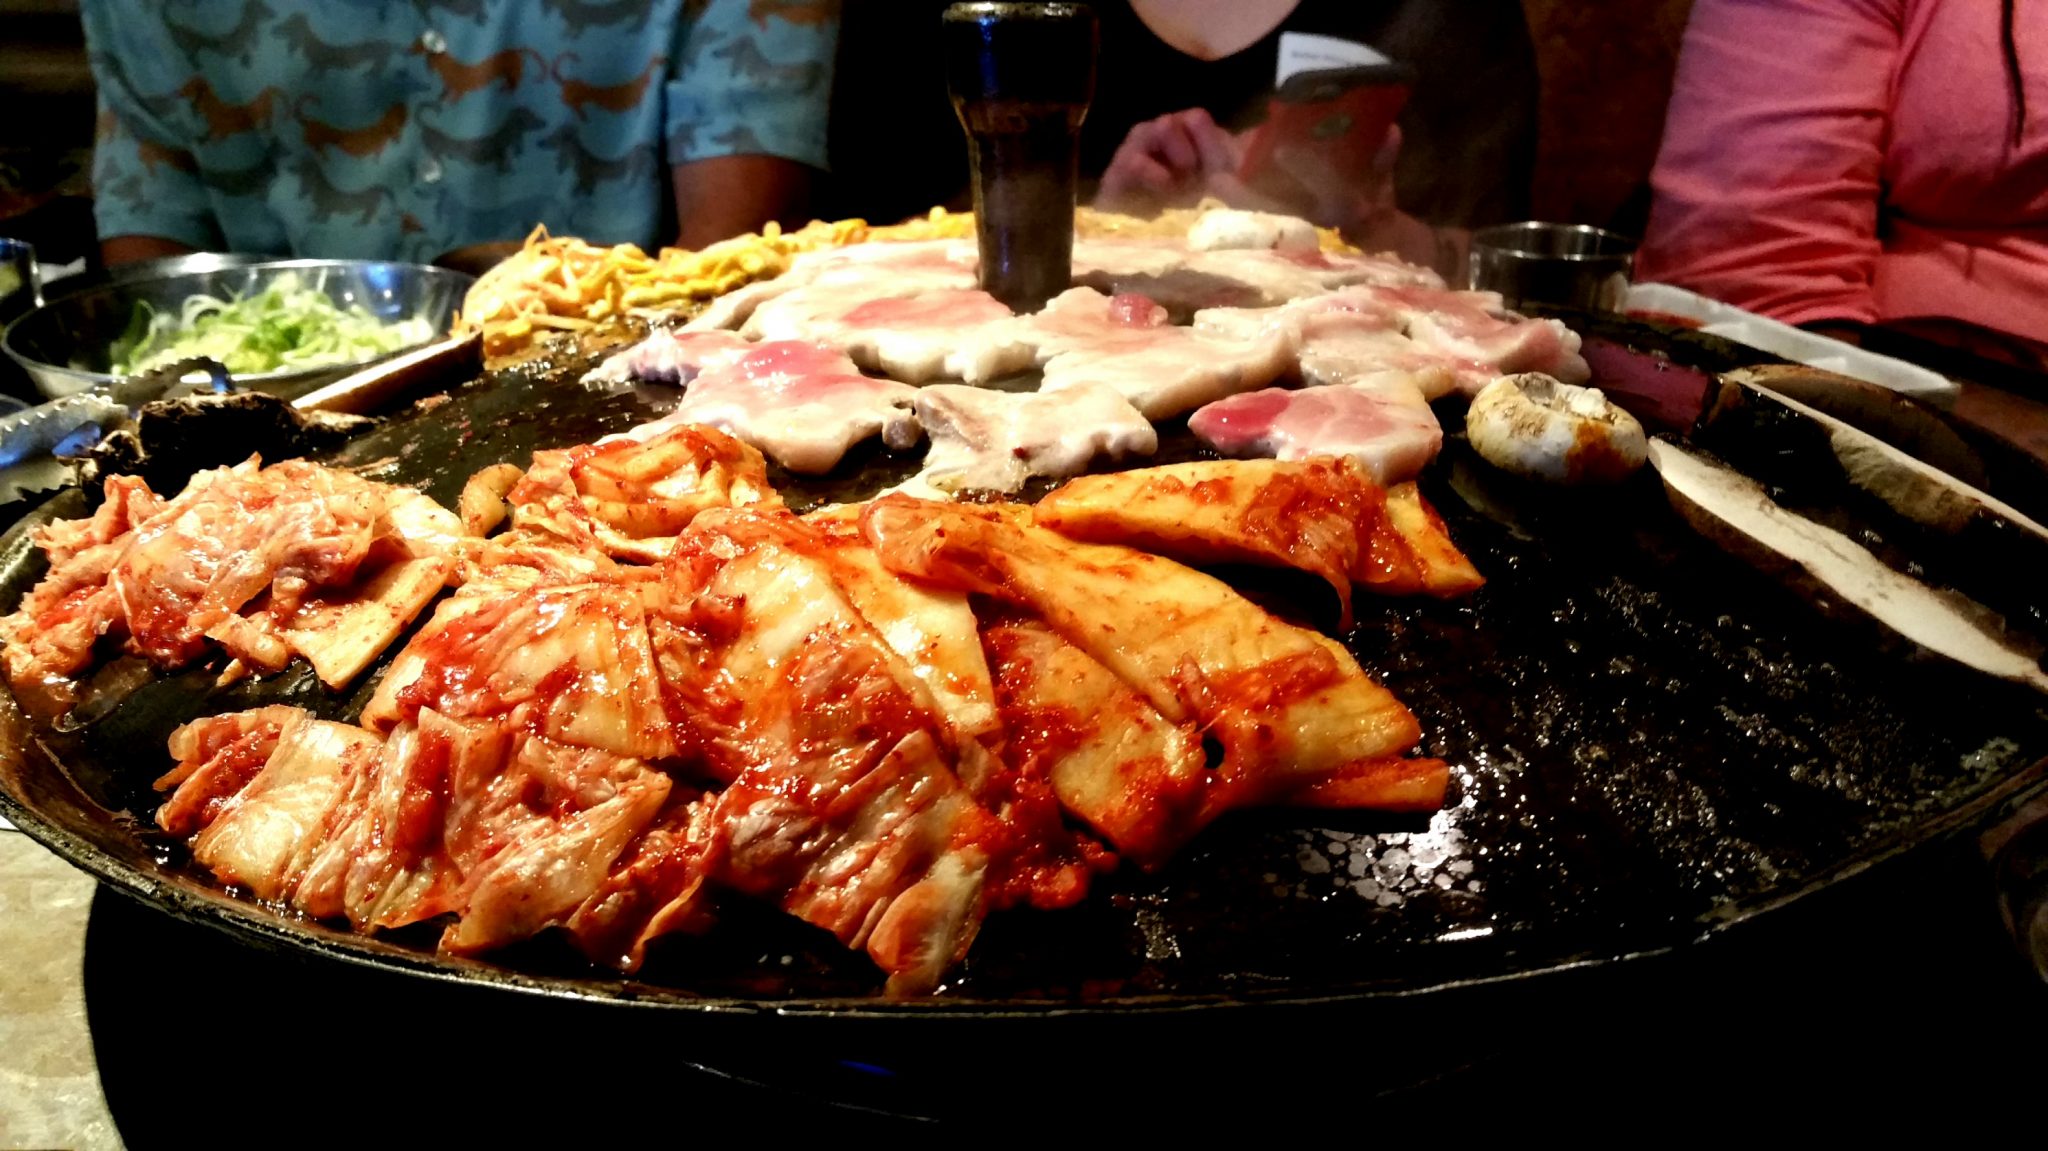 Honey Pig Duluth Georgia Korean restaurant Explore Gwinnett #SeoulOfTheSouth Korean Restaurant Tour